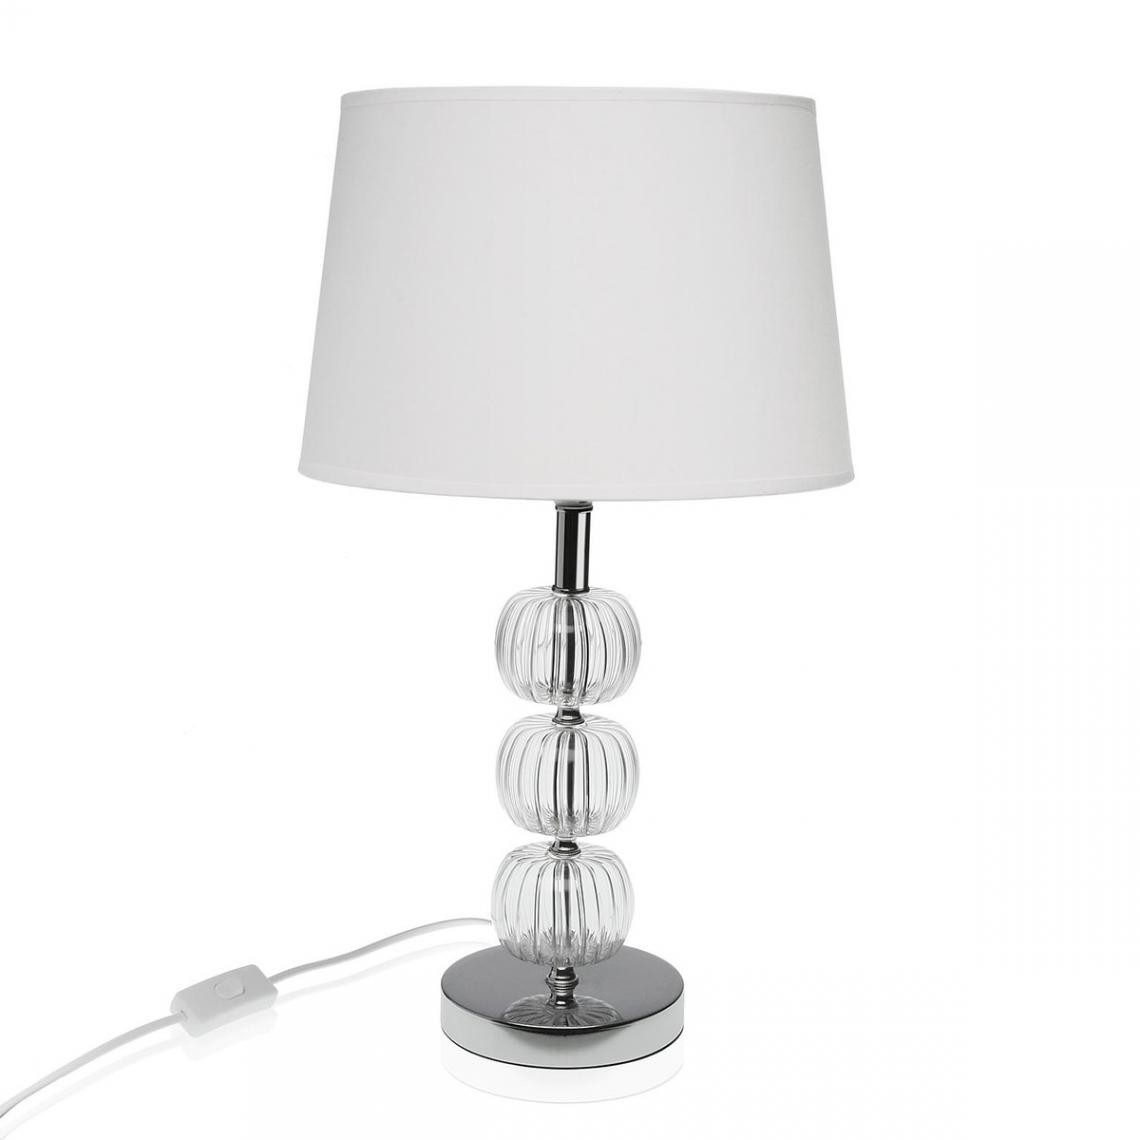 3S. x Home - Lampe De Table Blanche Moderne EMY - Lampes à poser